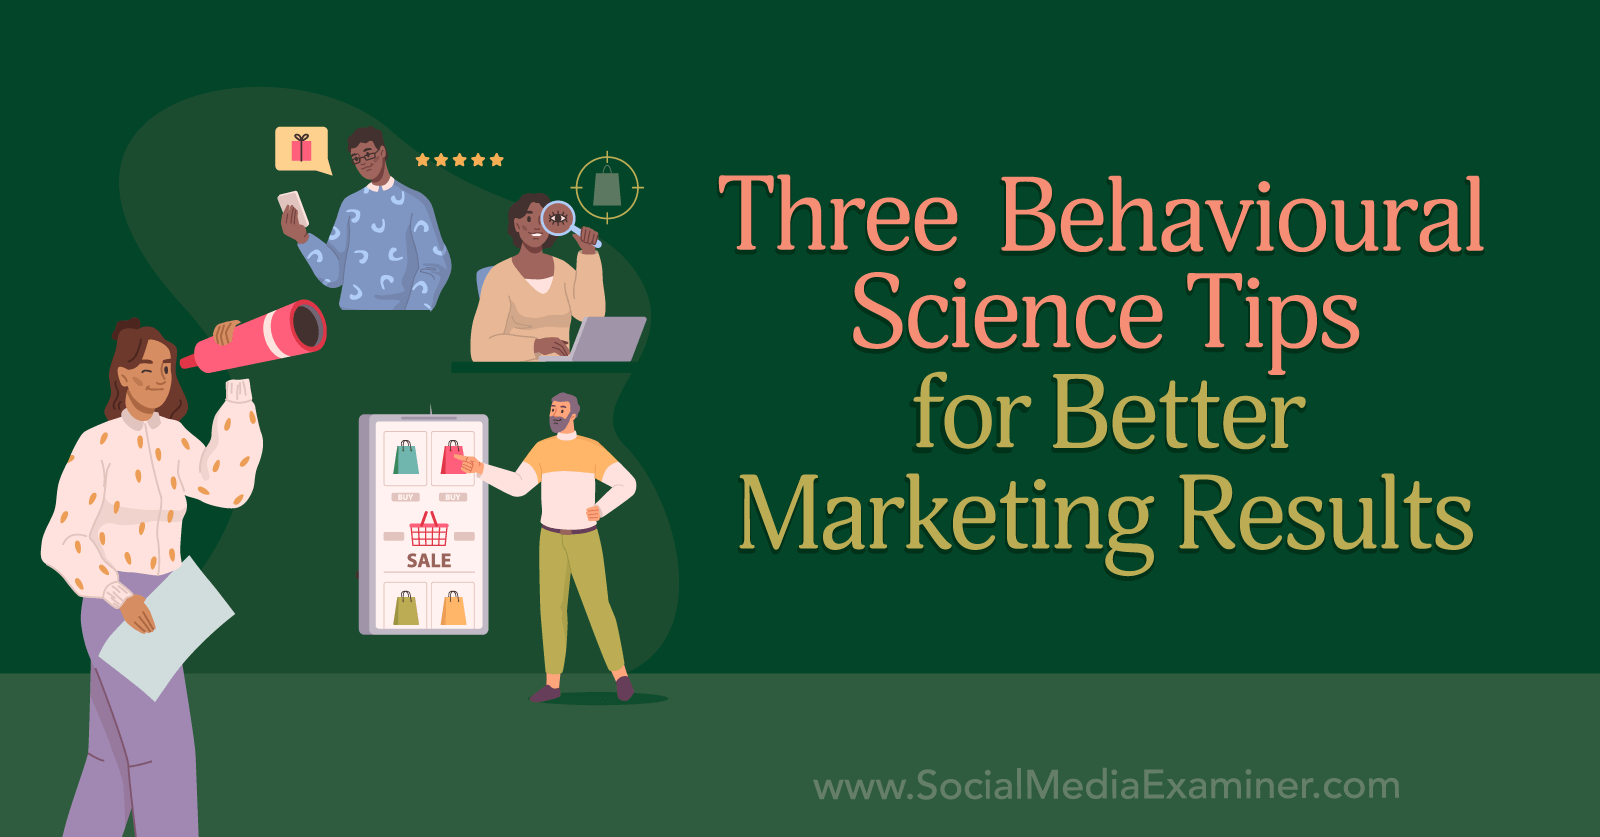 Three Behavioral Science Tips for Better Marketing Results by Social Media Examiner